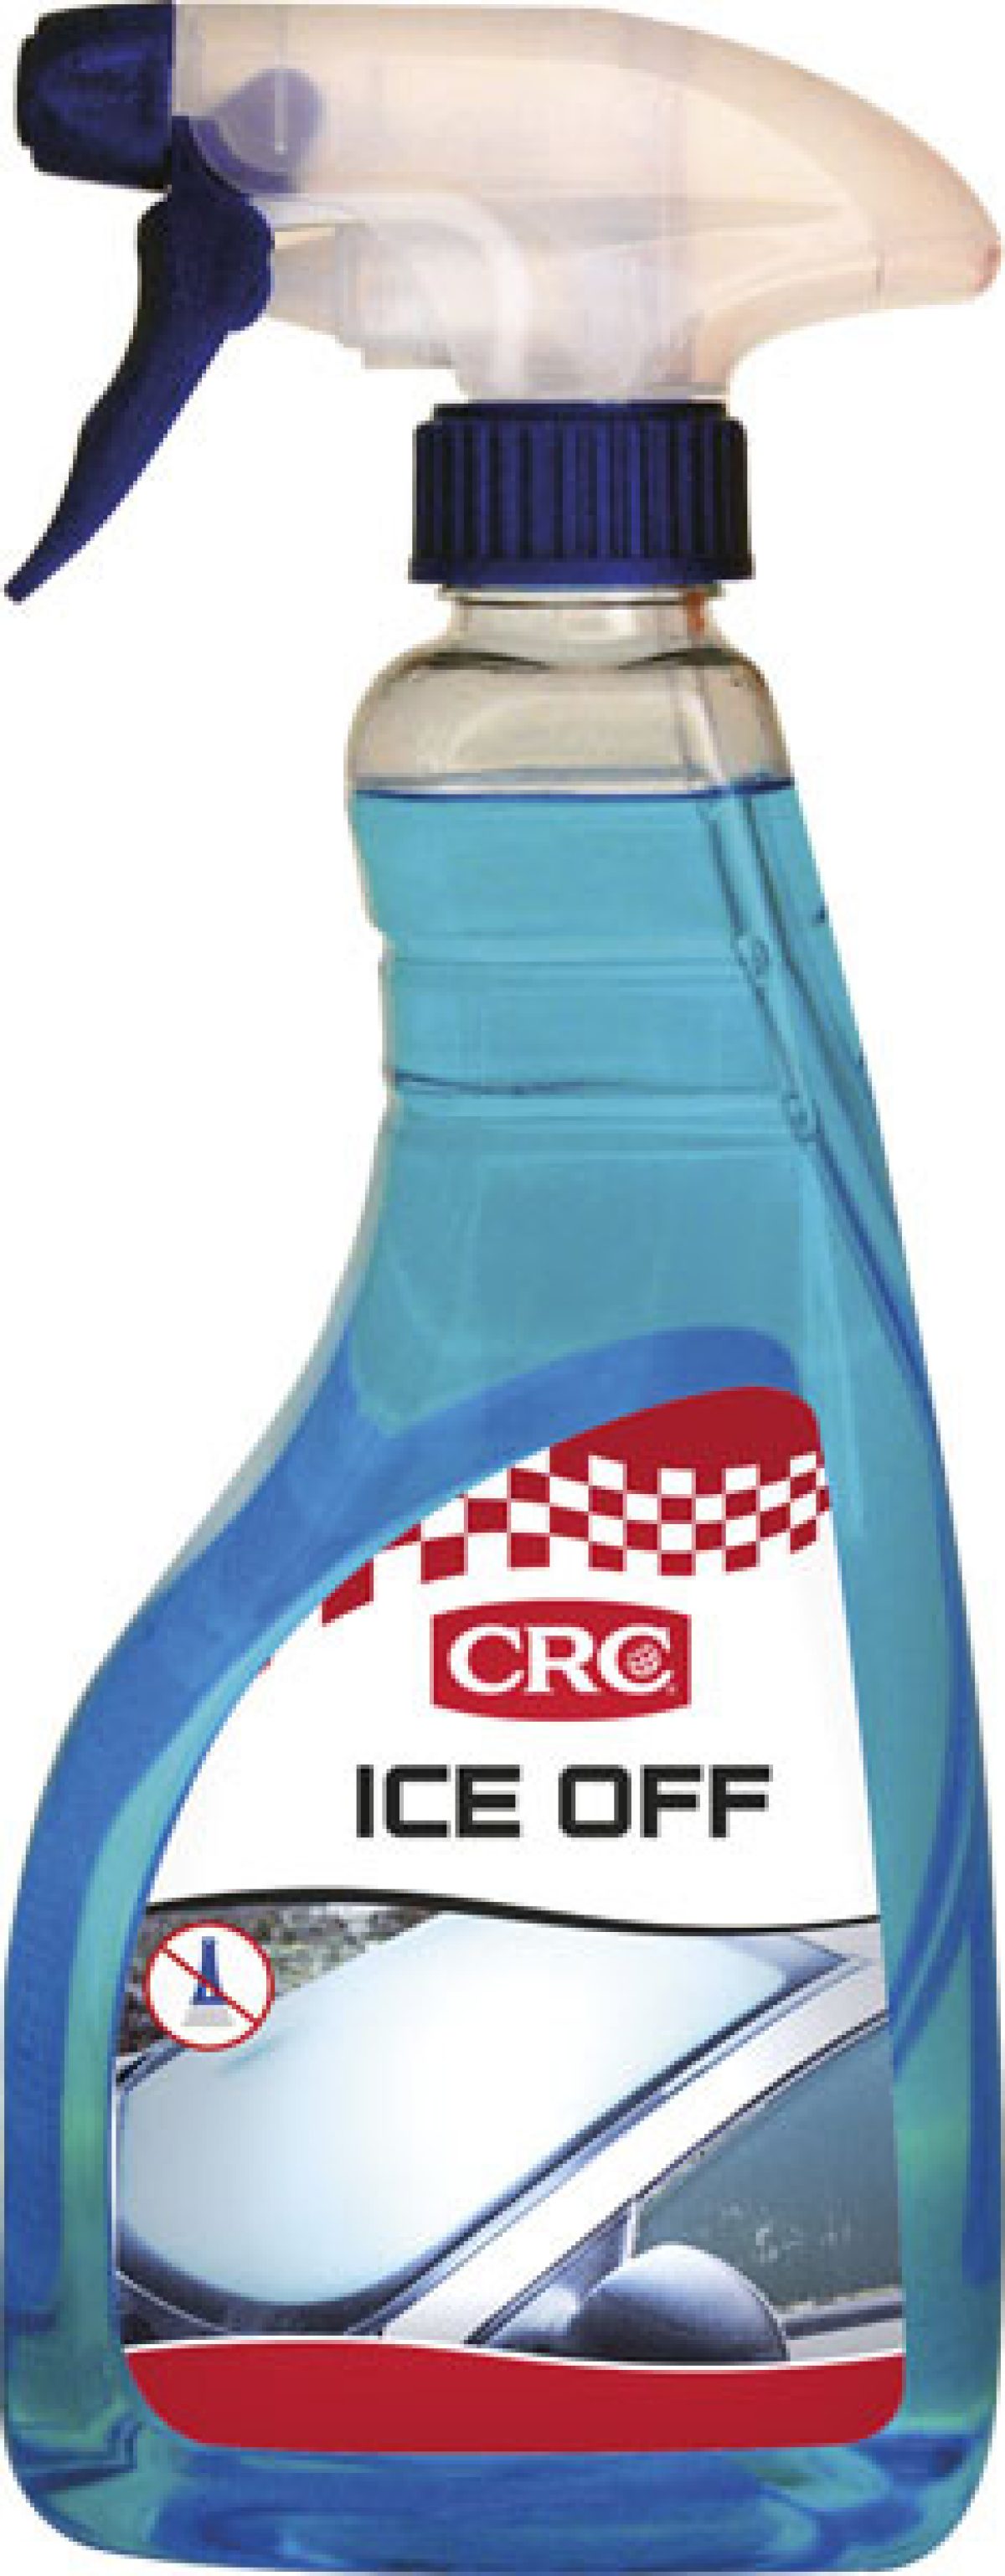 CR CRC Ice-Off Winshield Spray De-Icer Net WT 12. oz. (340g) Pack of 2,White